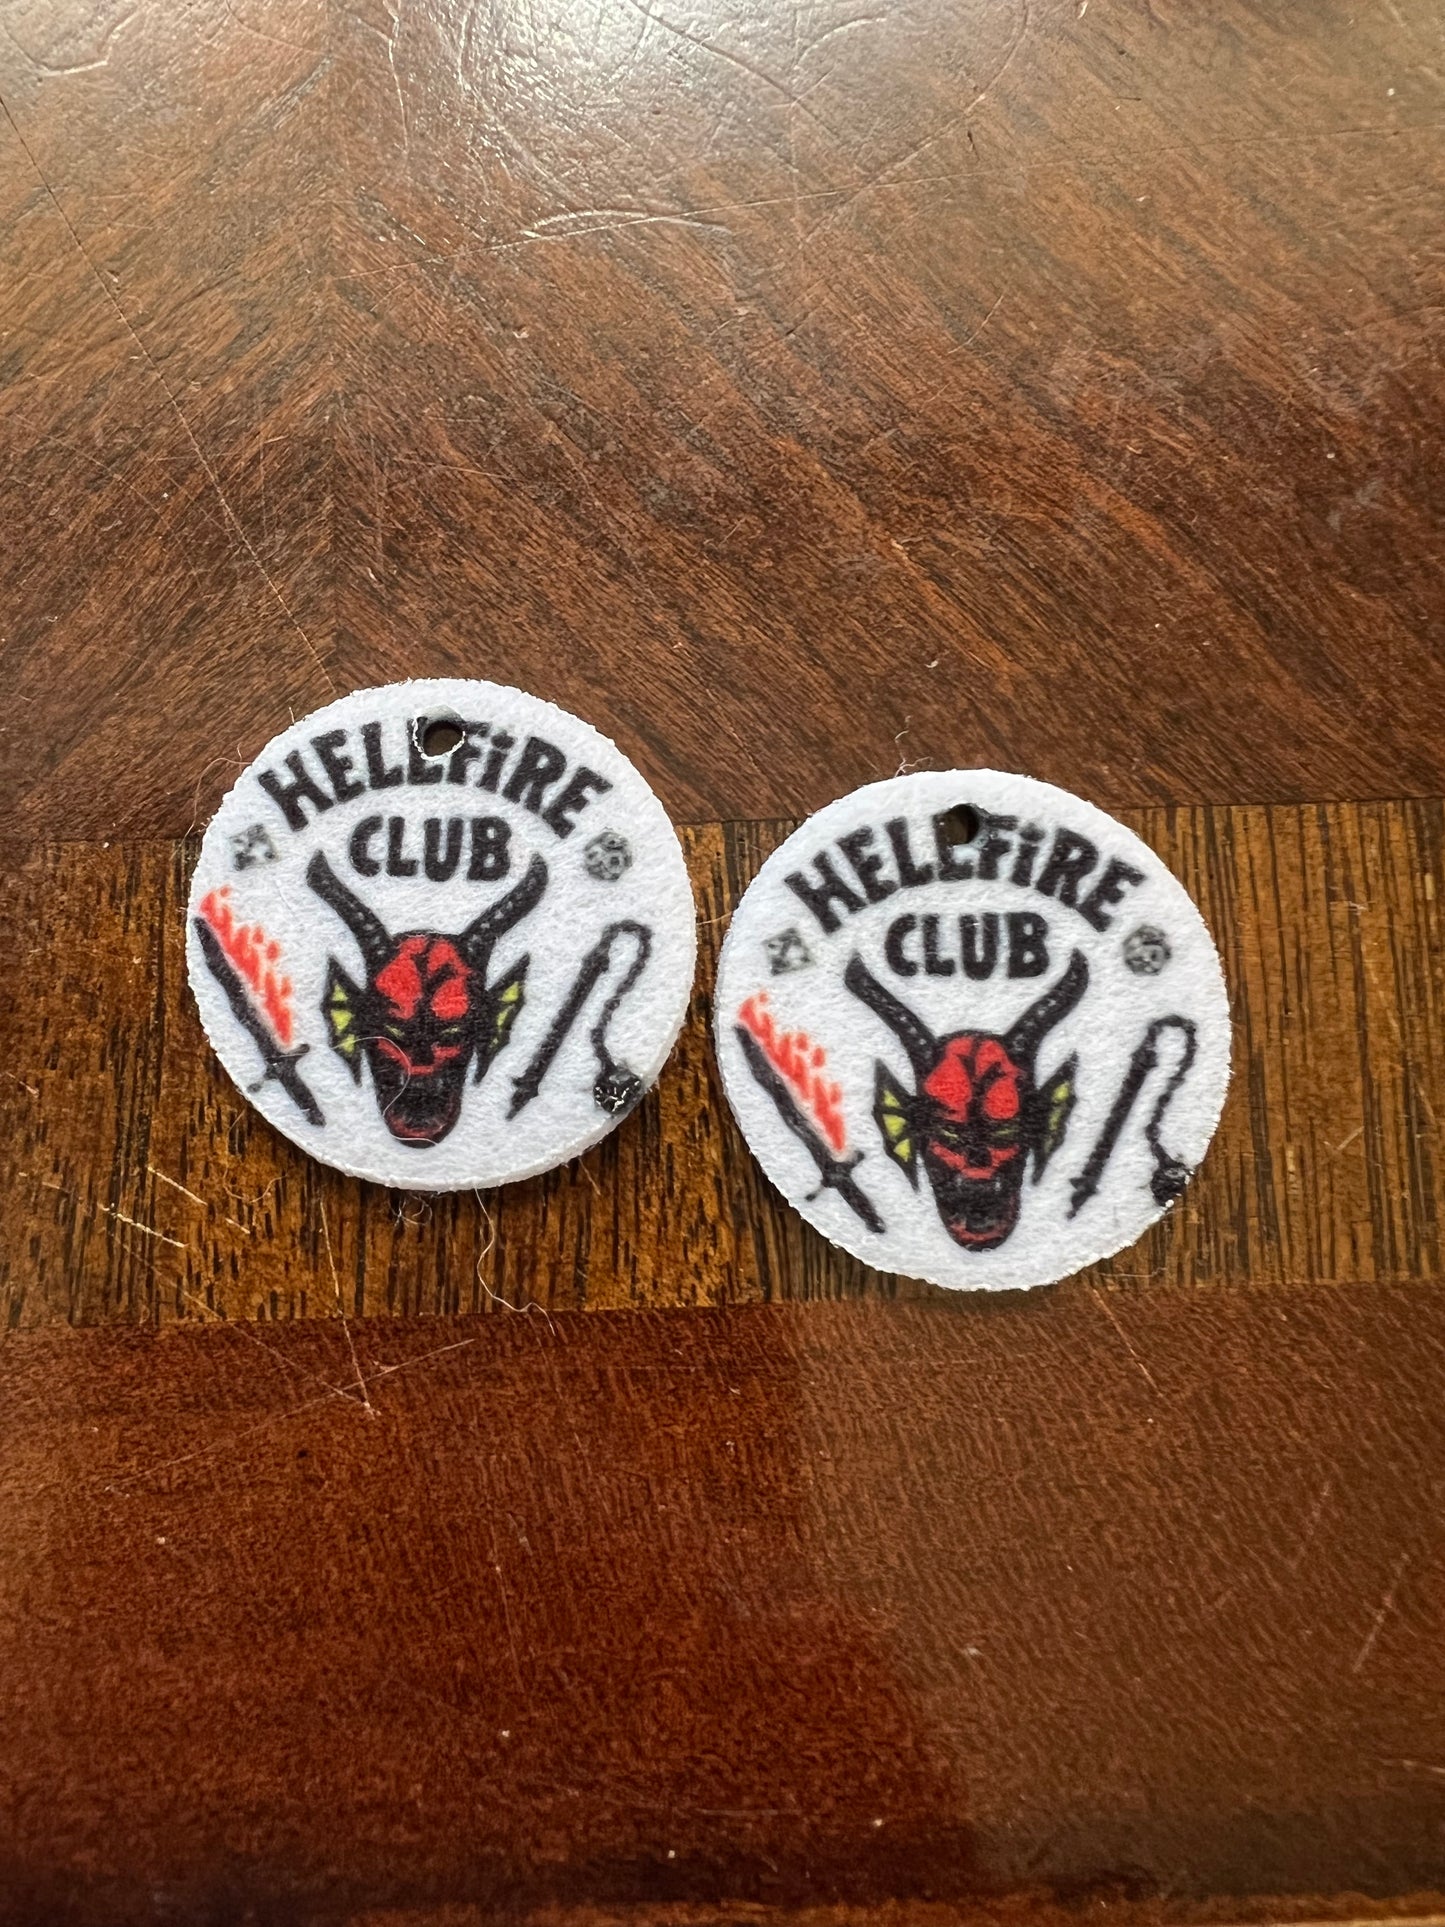 Hellfire club earrings